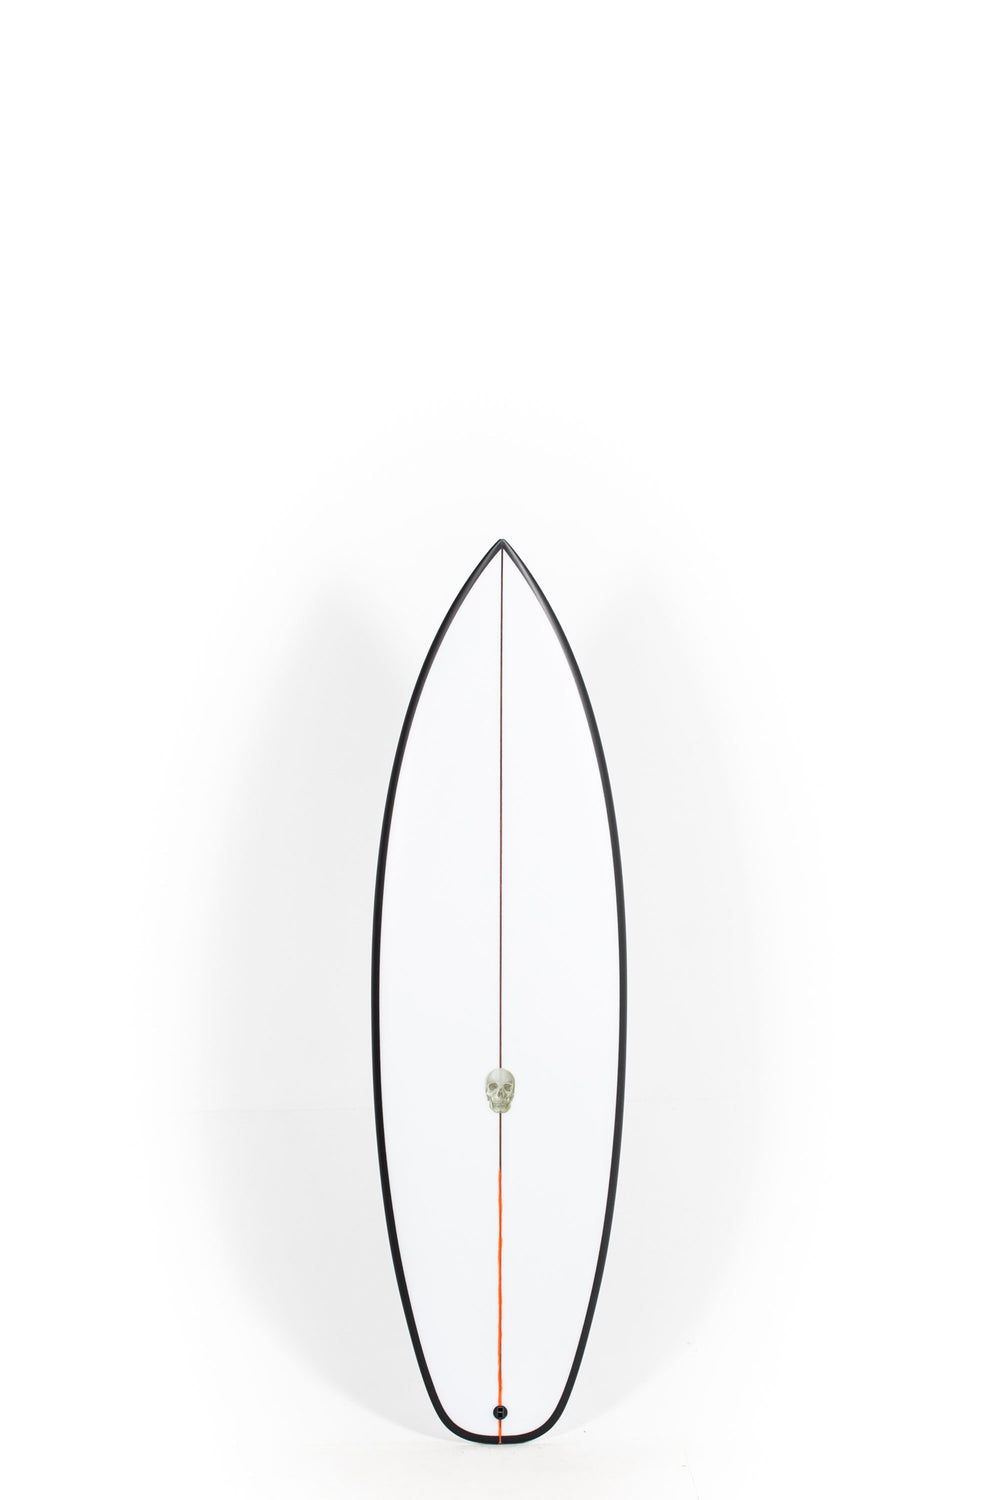 Pukas Surf Shop - Christenson Surfboards - OP1 - 5'7